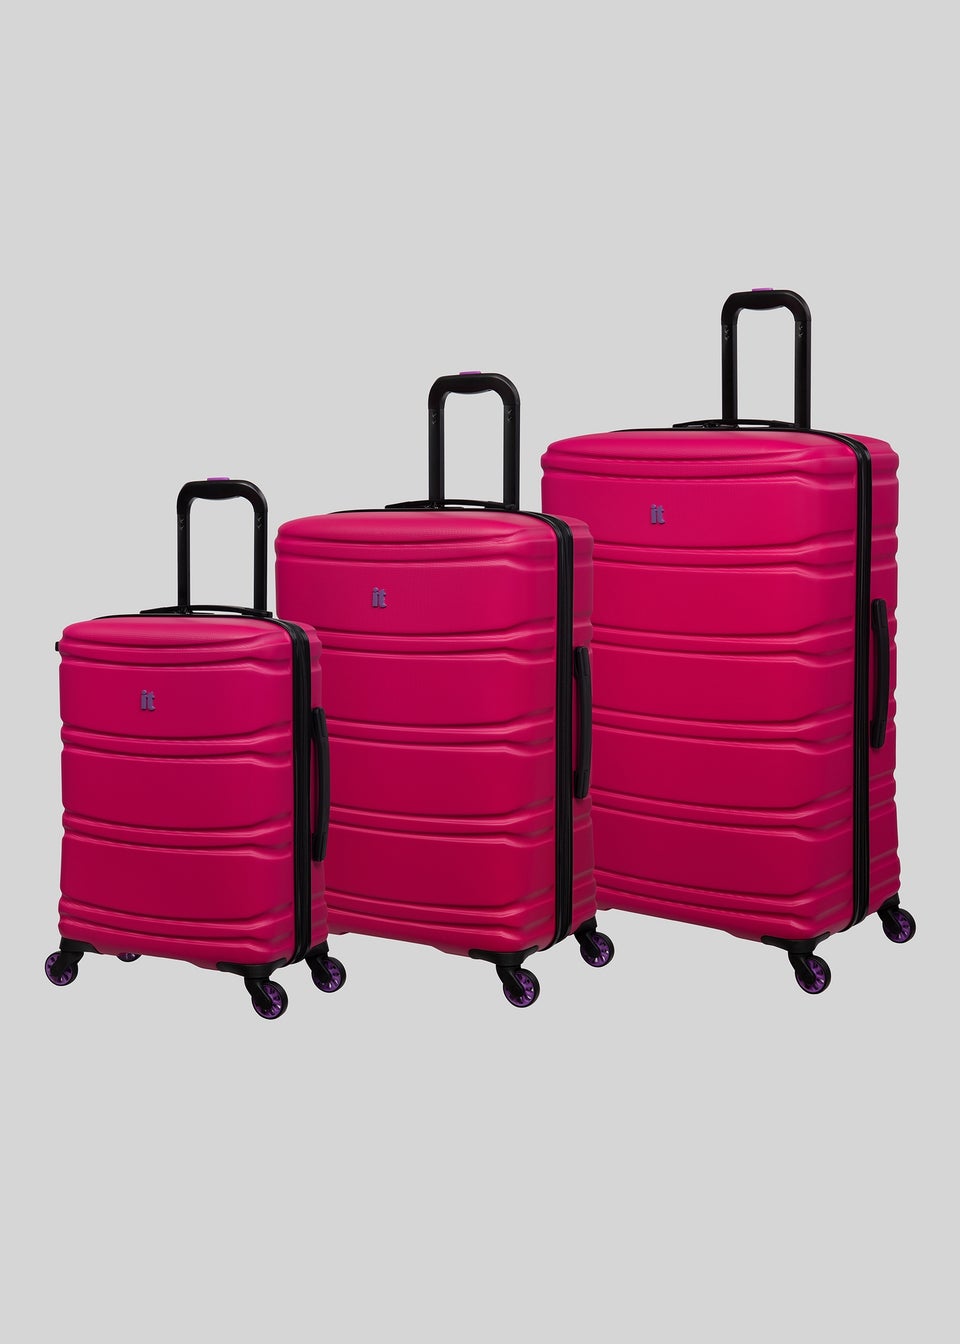 IT Luggage Pink Hard Shell Suitcase